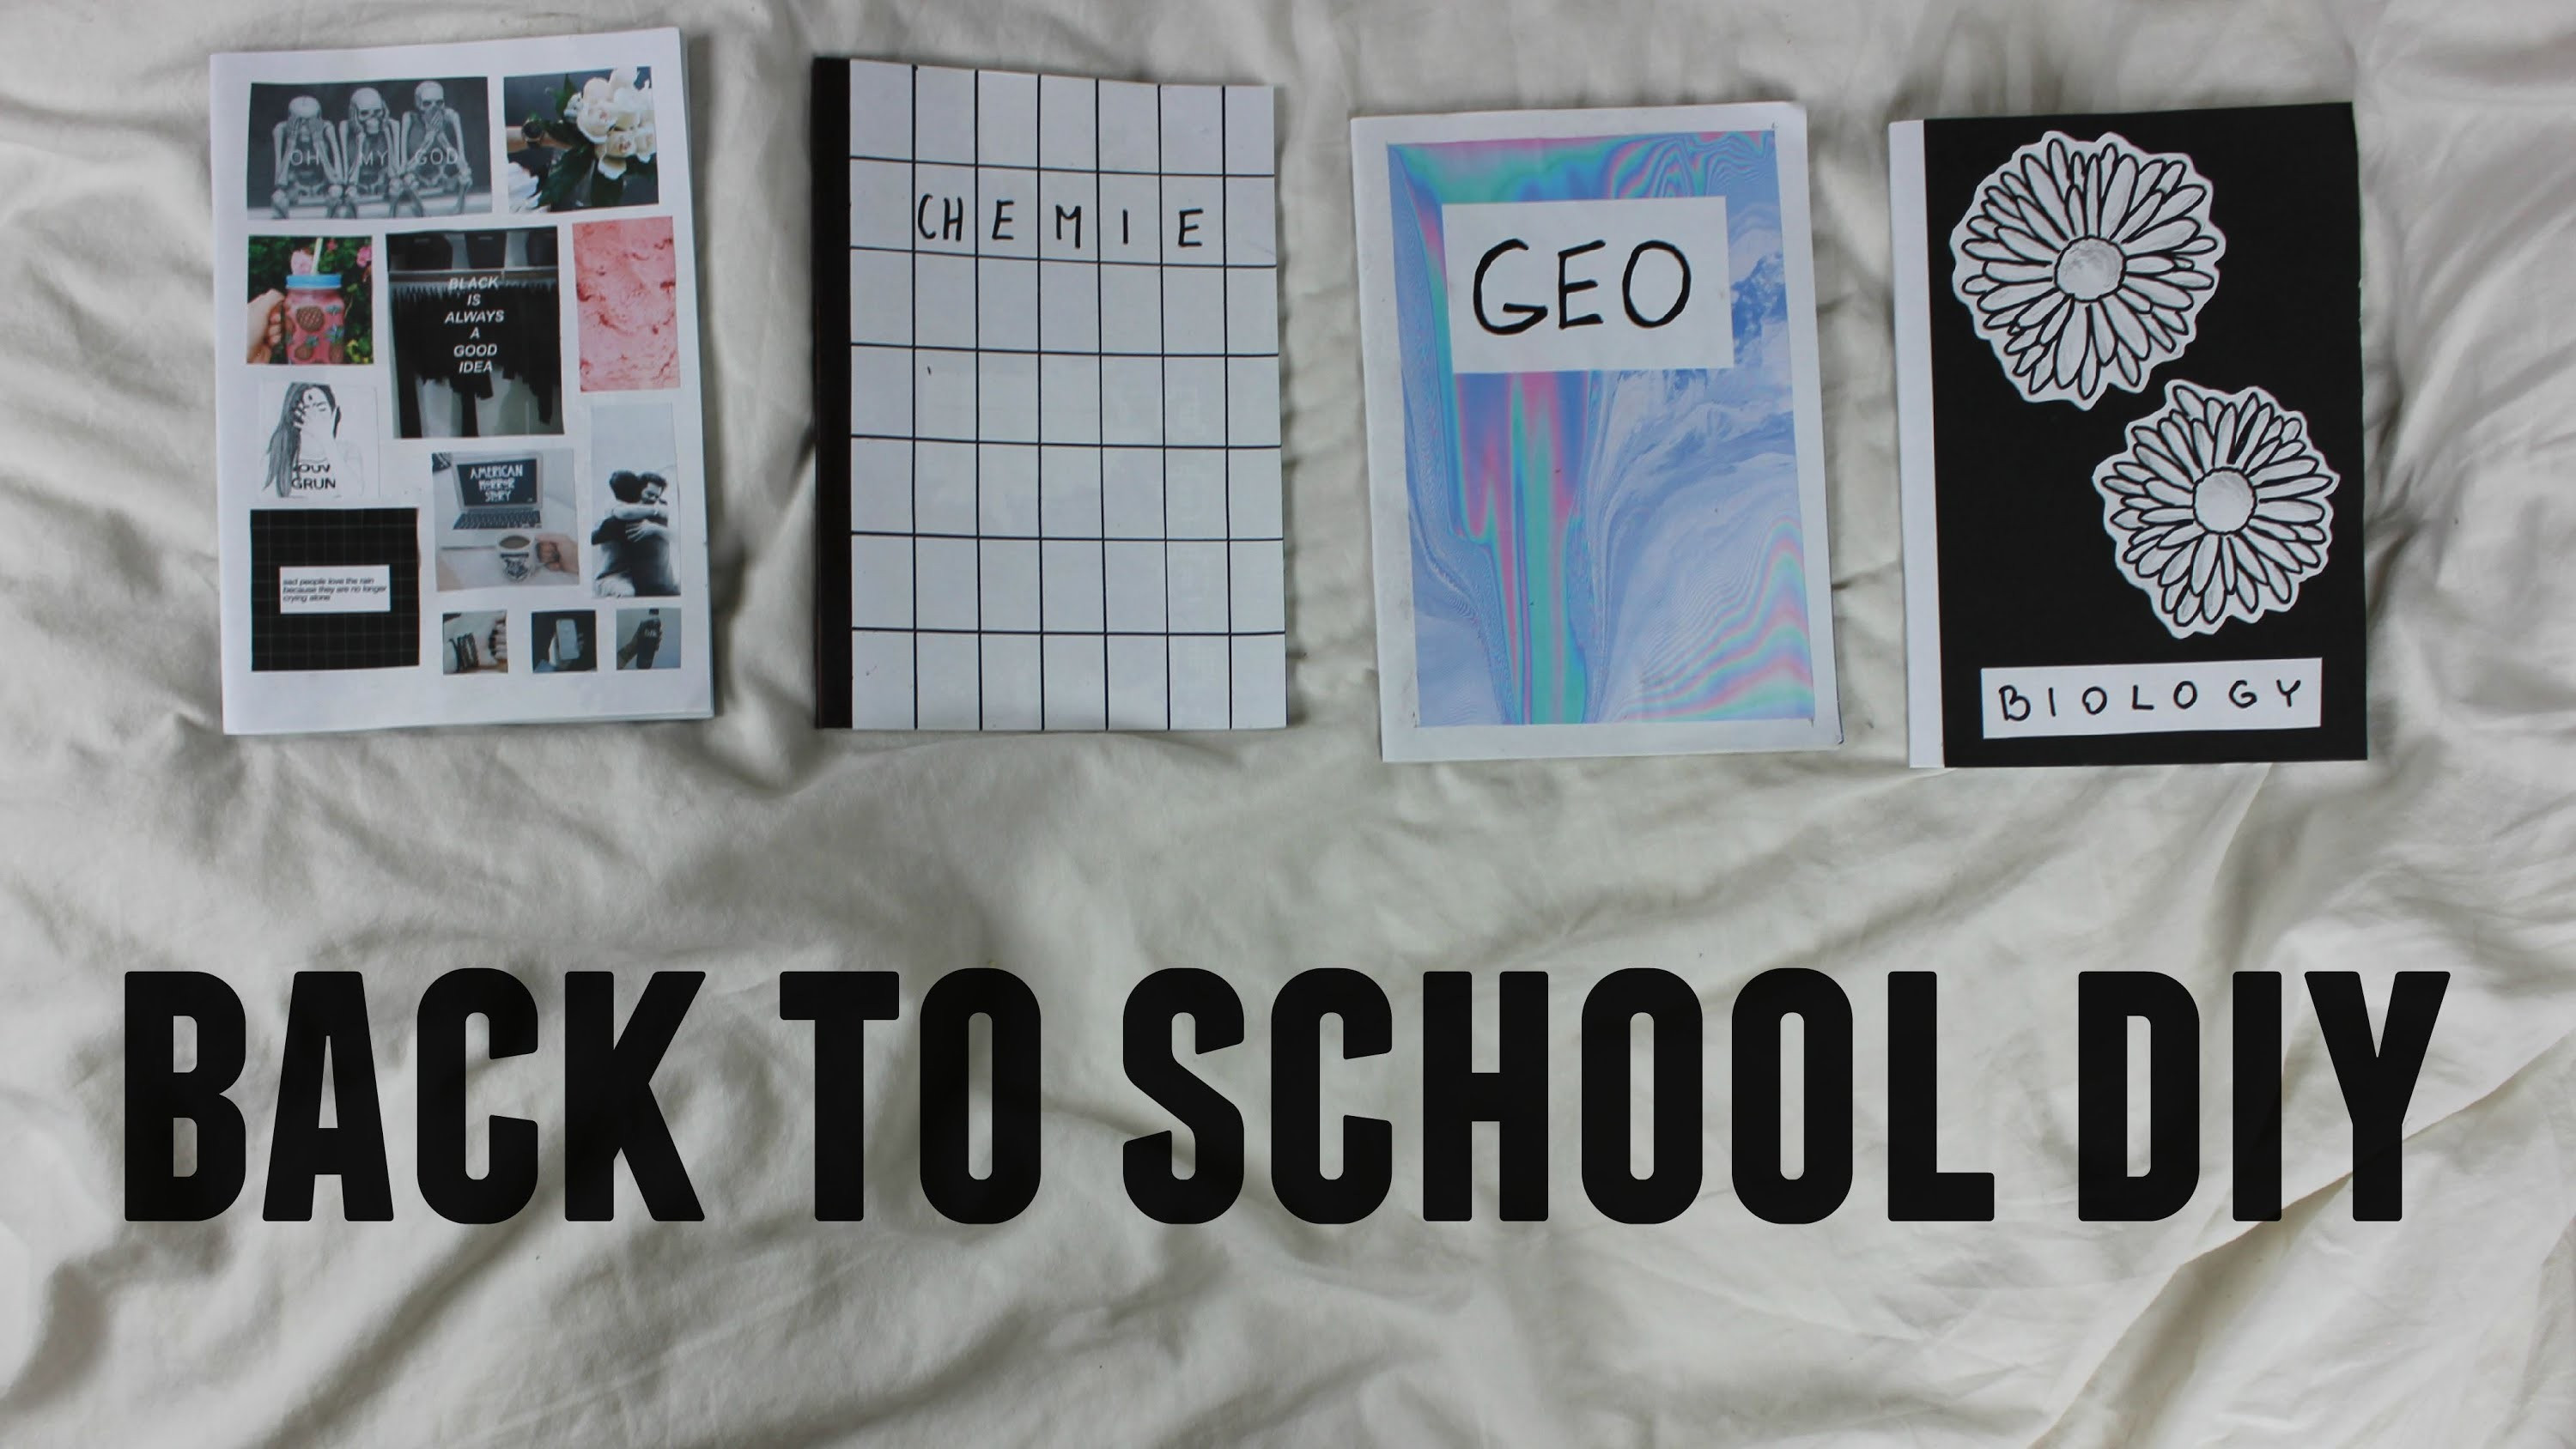 Back To School Diy Tumblr
 TUMBLR DIY [Back to school] Zpátky do školy 2015